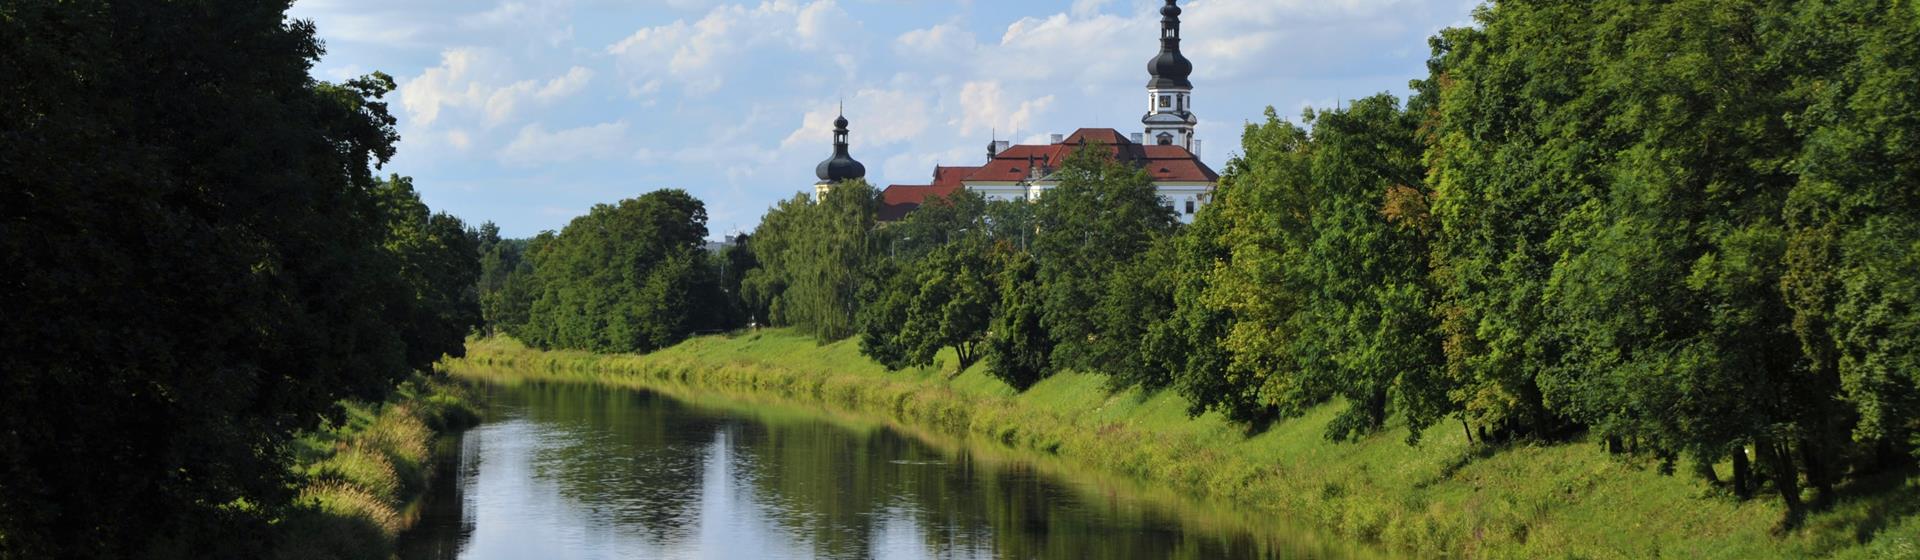 Olomouc Holidays